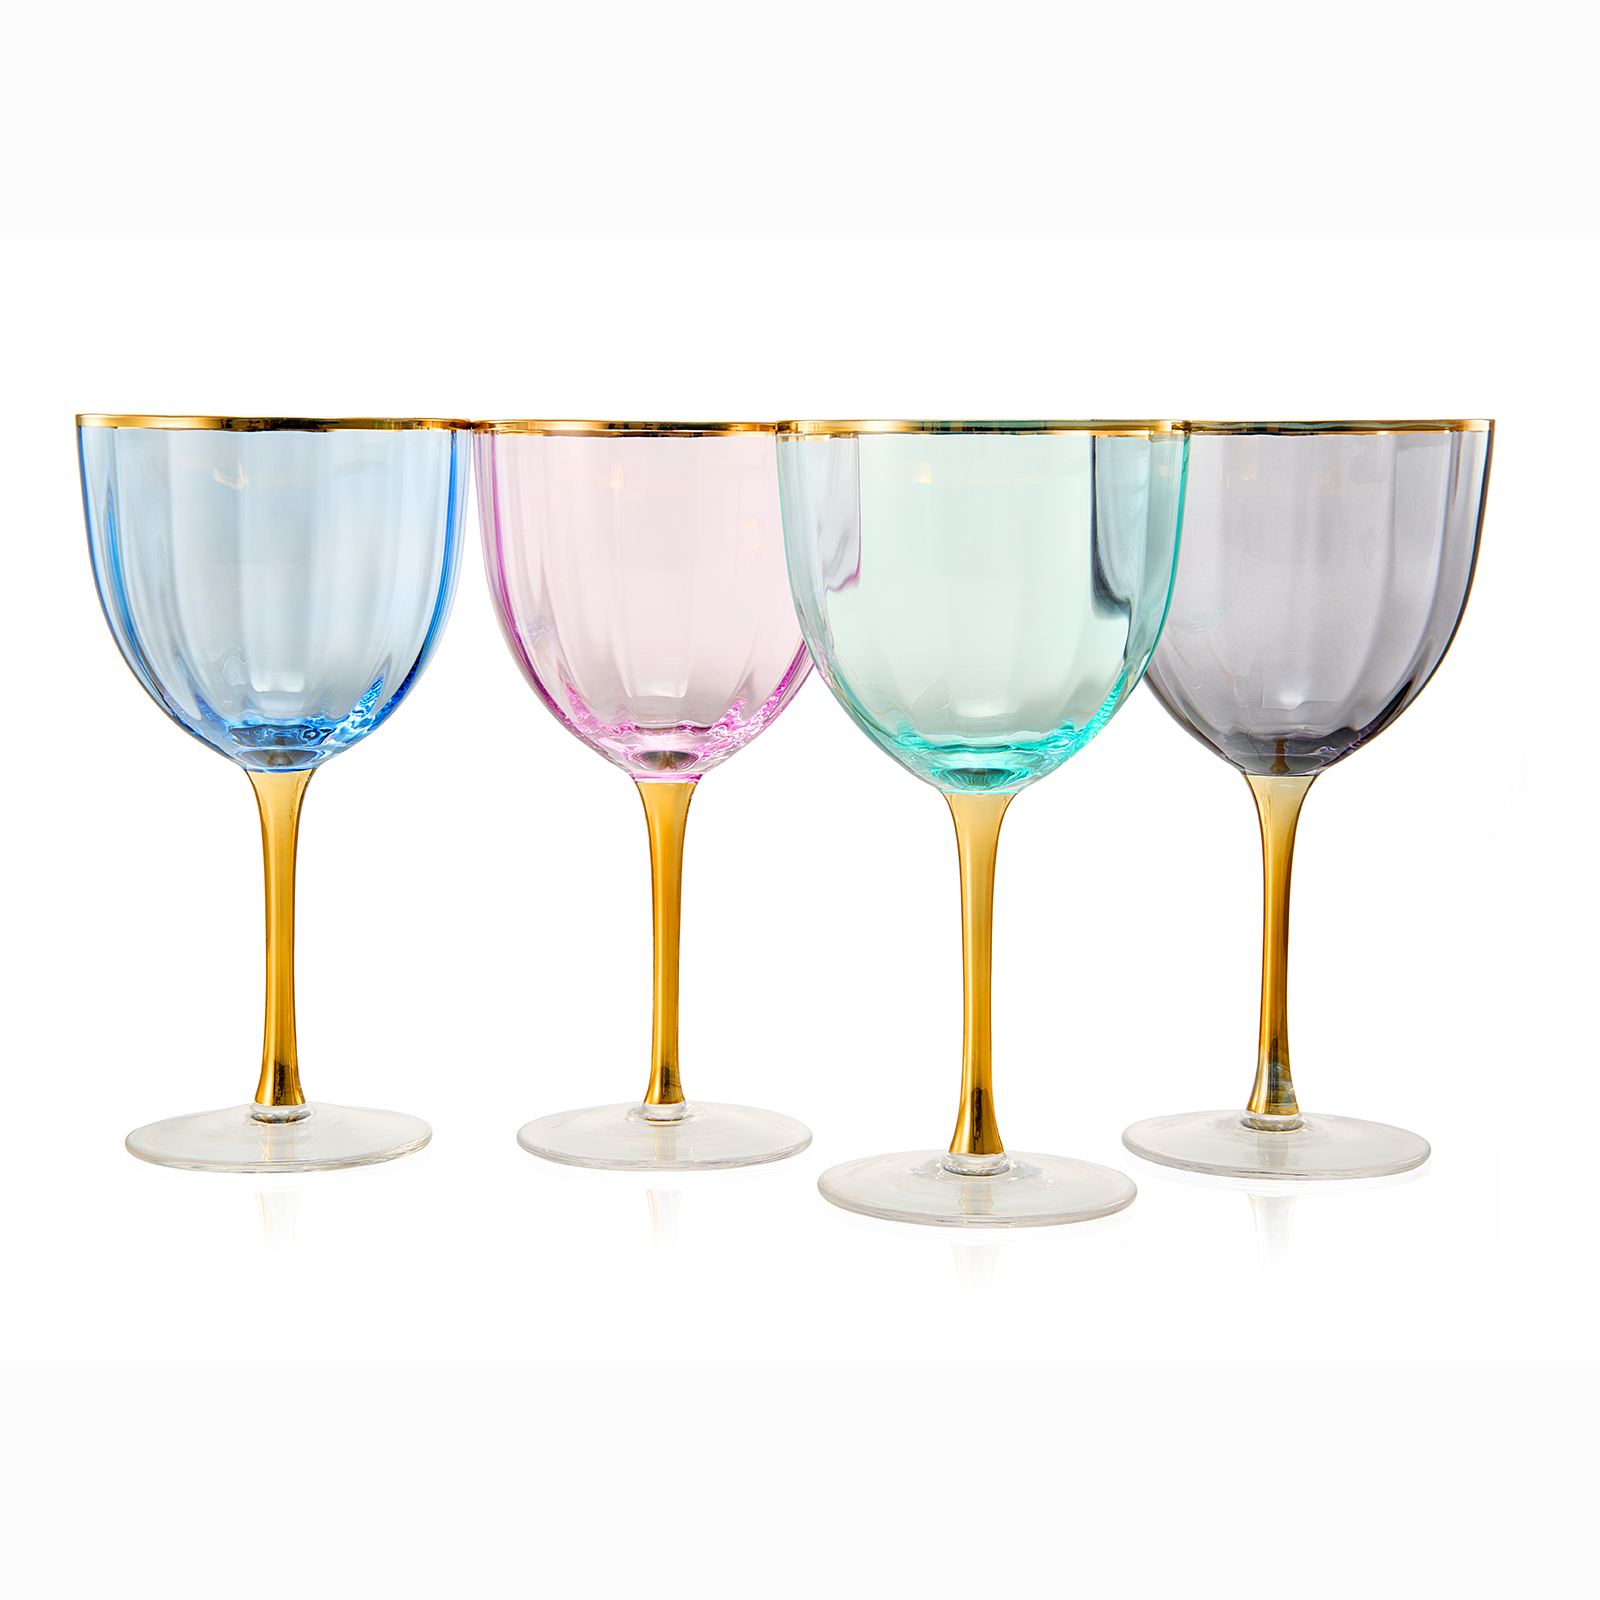 Colored Crystal Wine Glass Set of 6, Large Stemmed 12 oz Glasses, Grea –  The Wine Savant